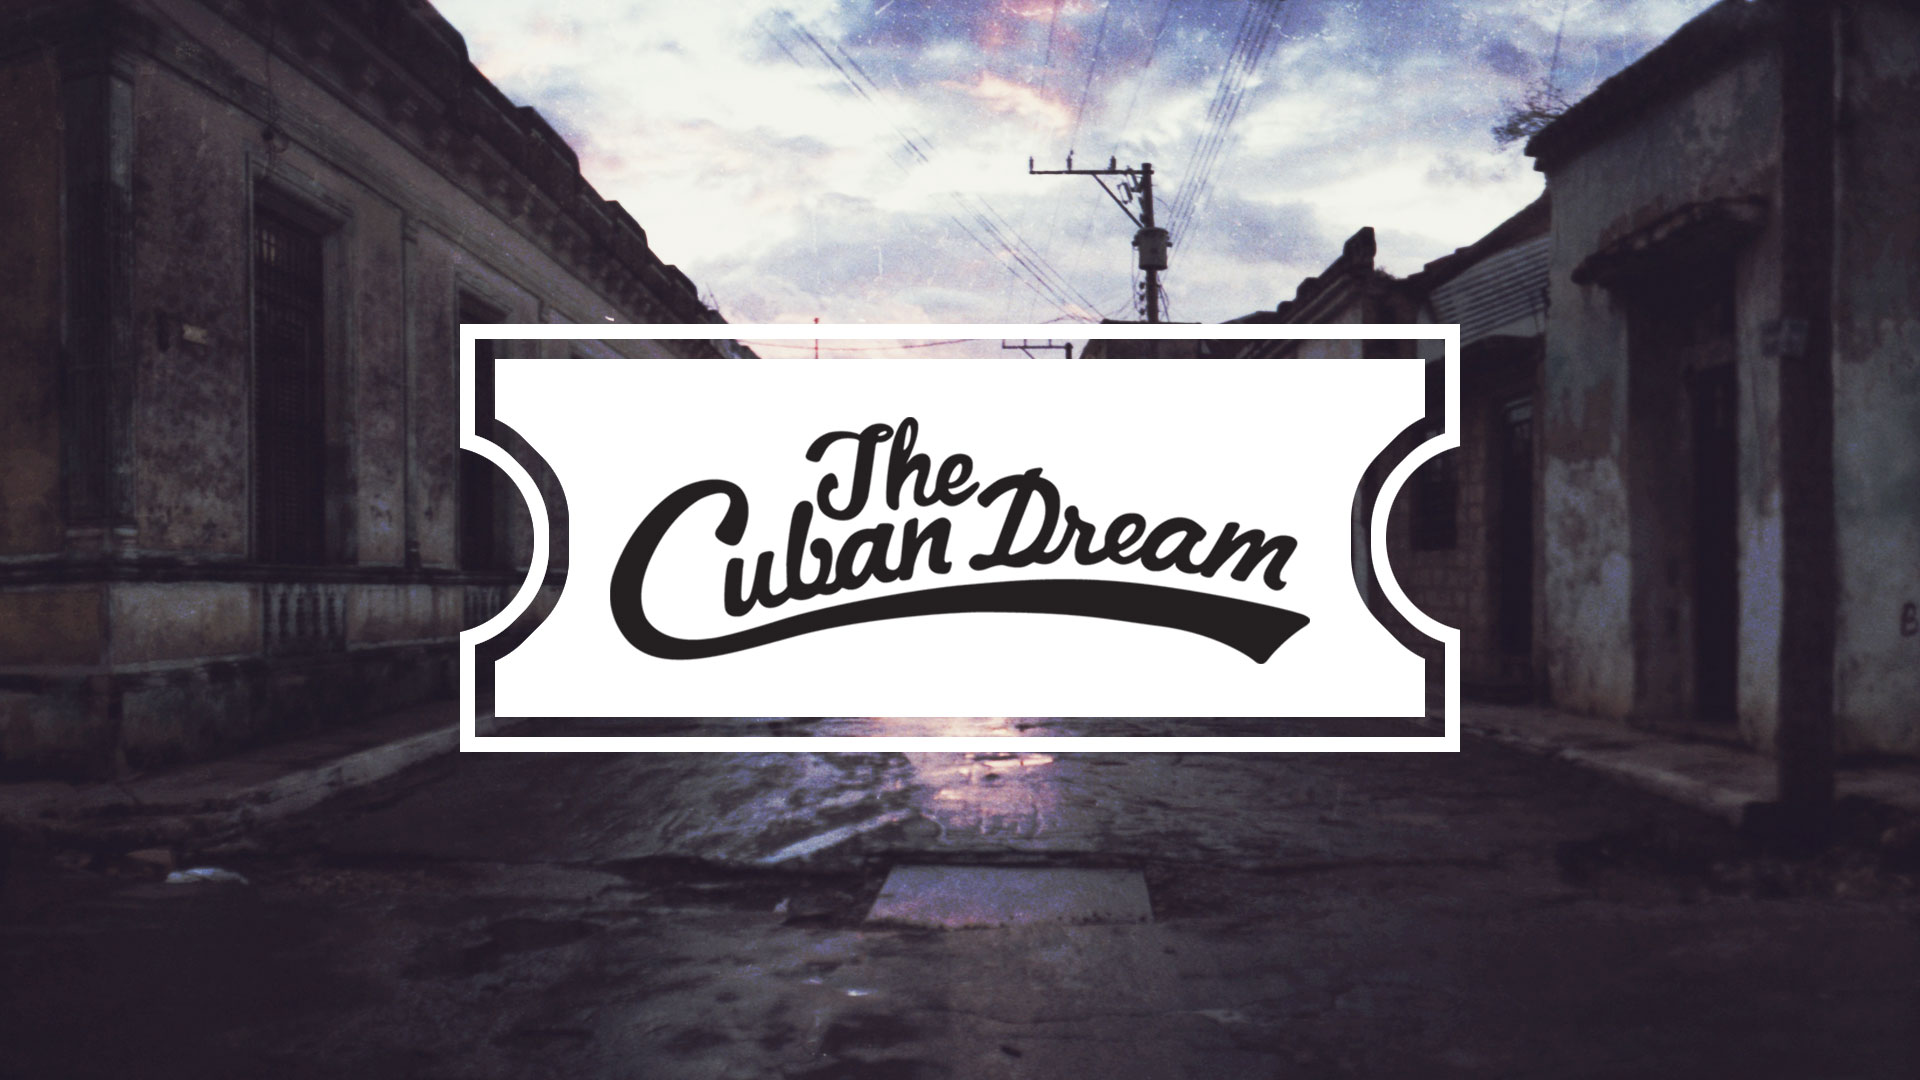 The Cuban Dream